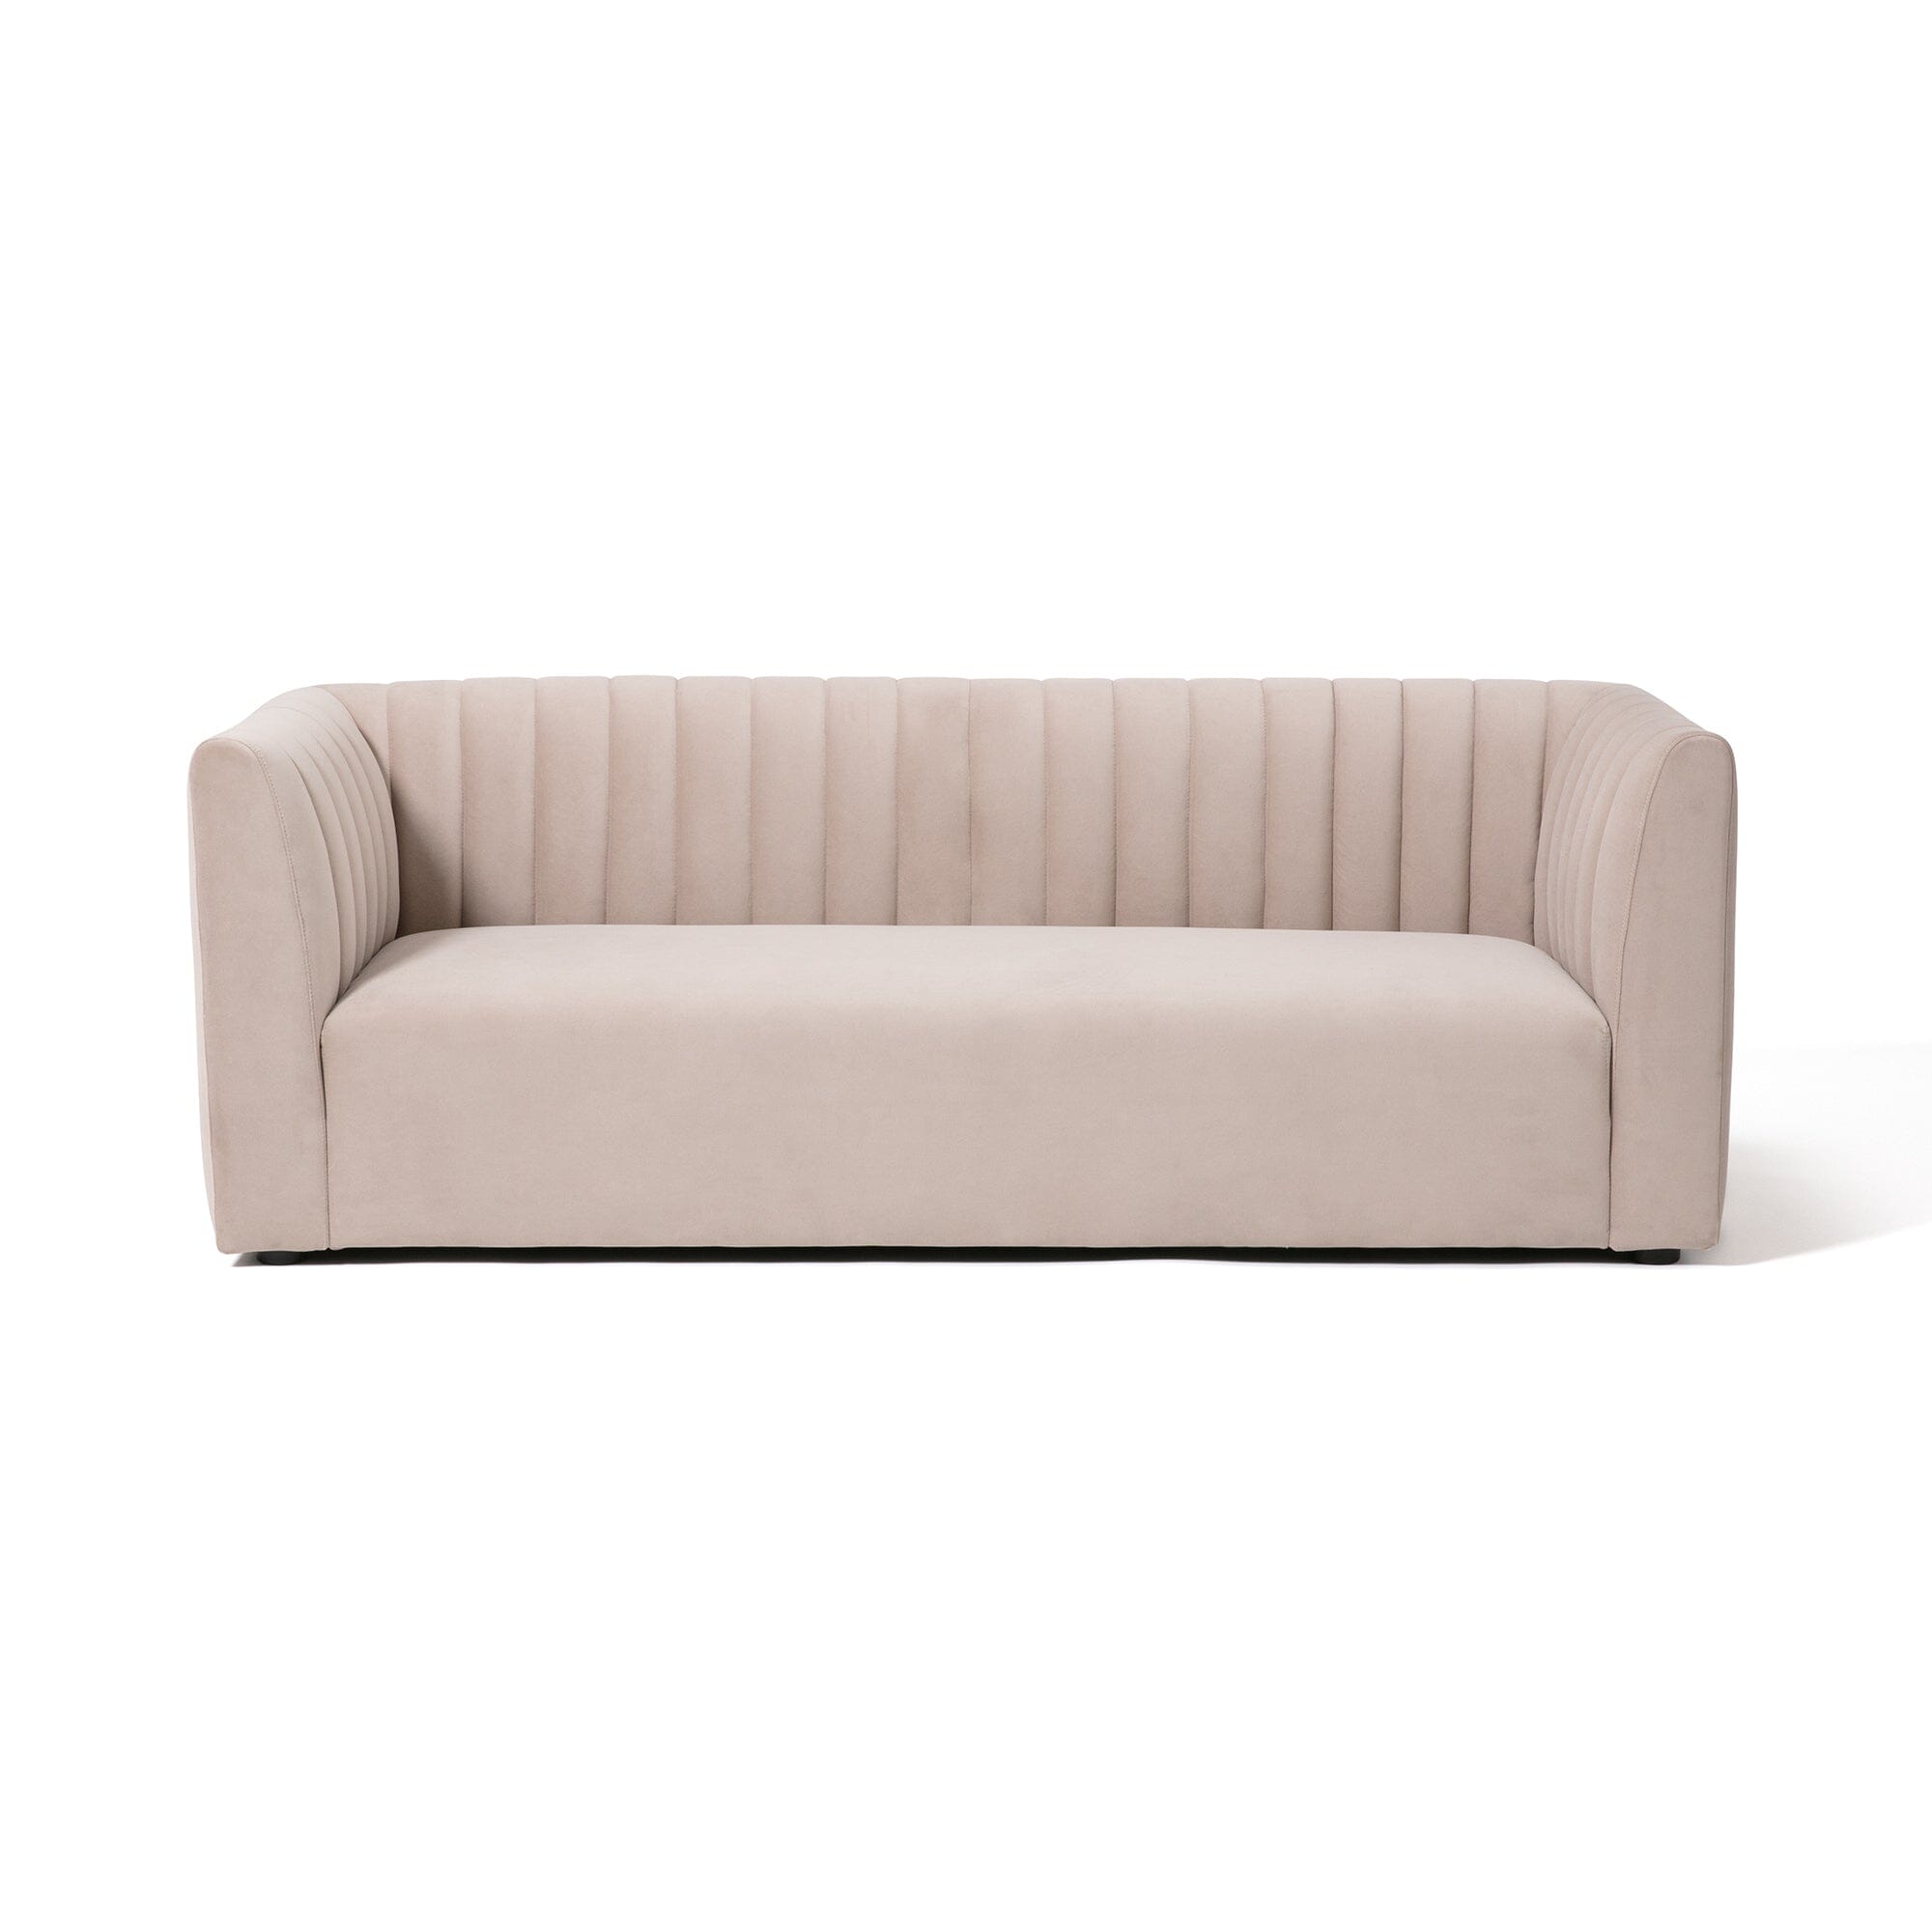 Chouette Sofa 3 Seat  1750 × 700 × 620  Beige